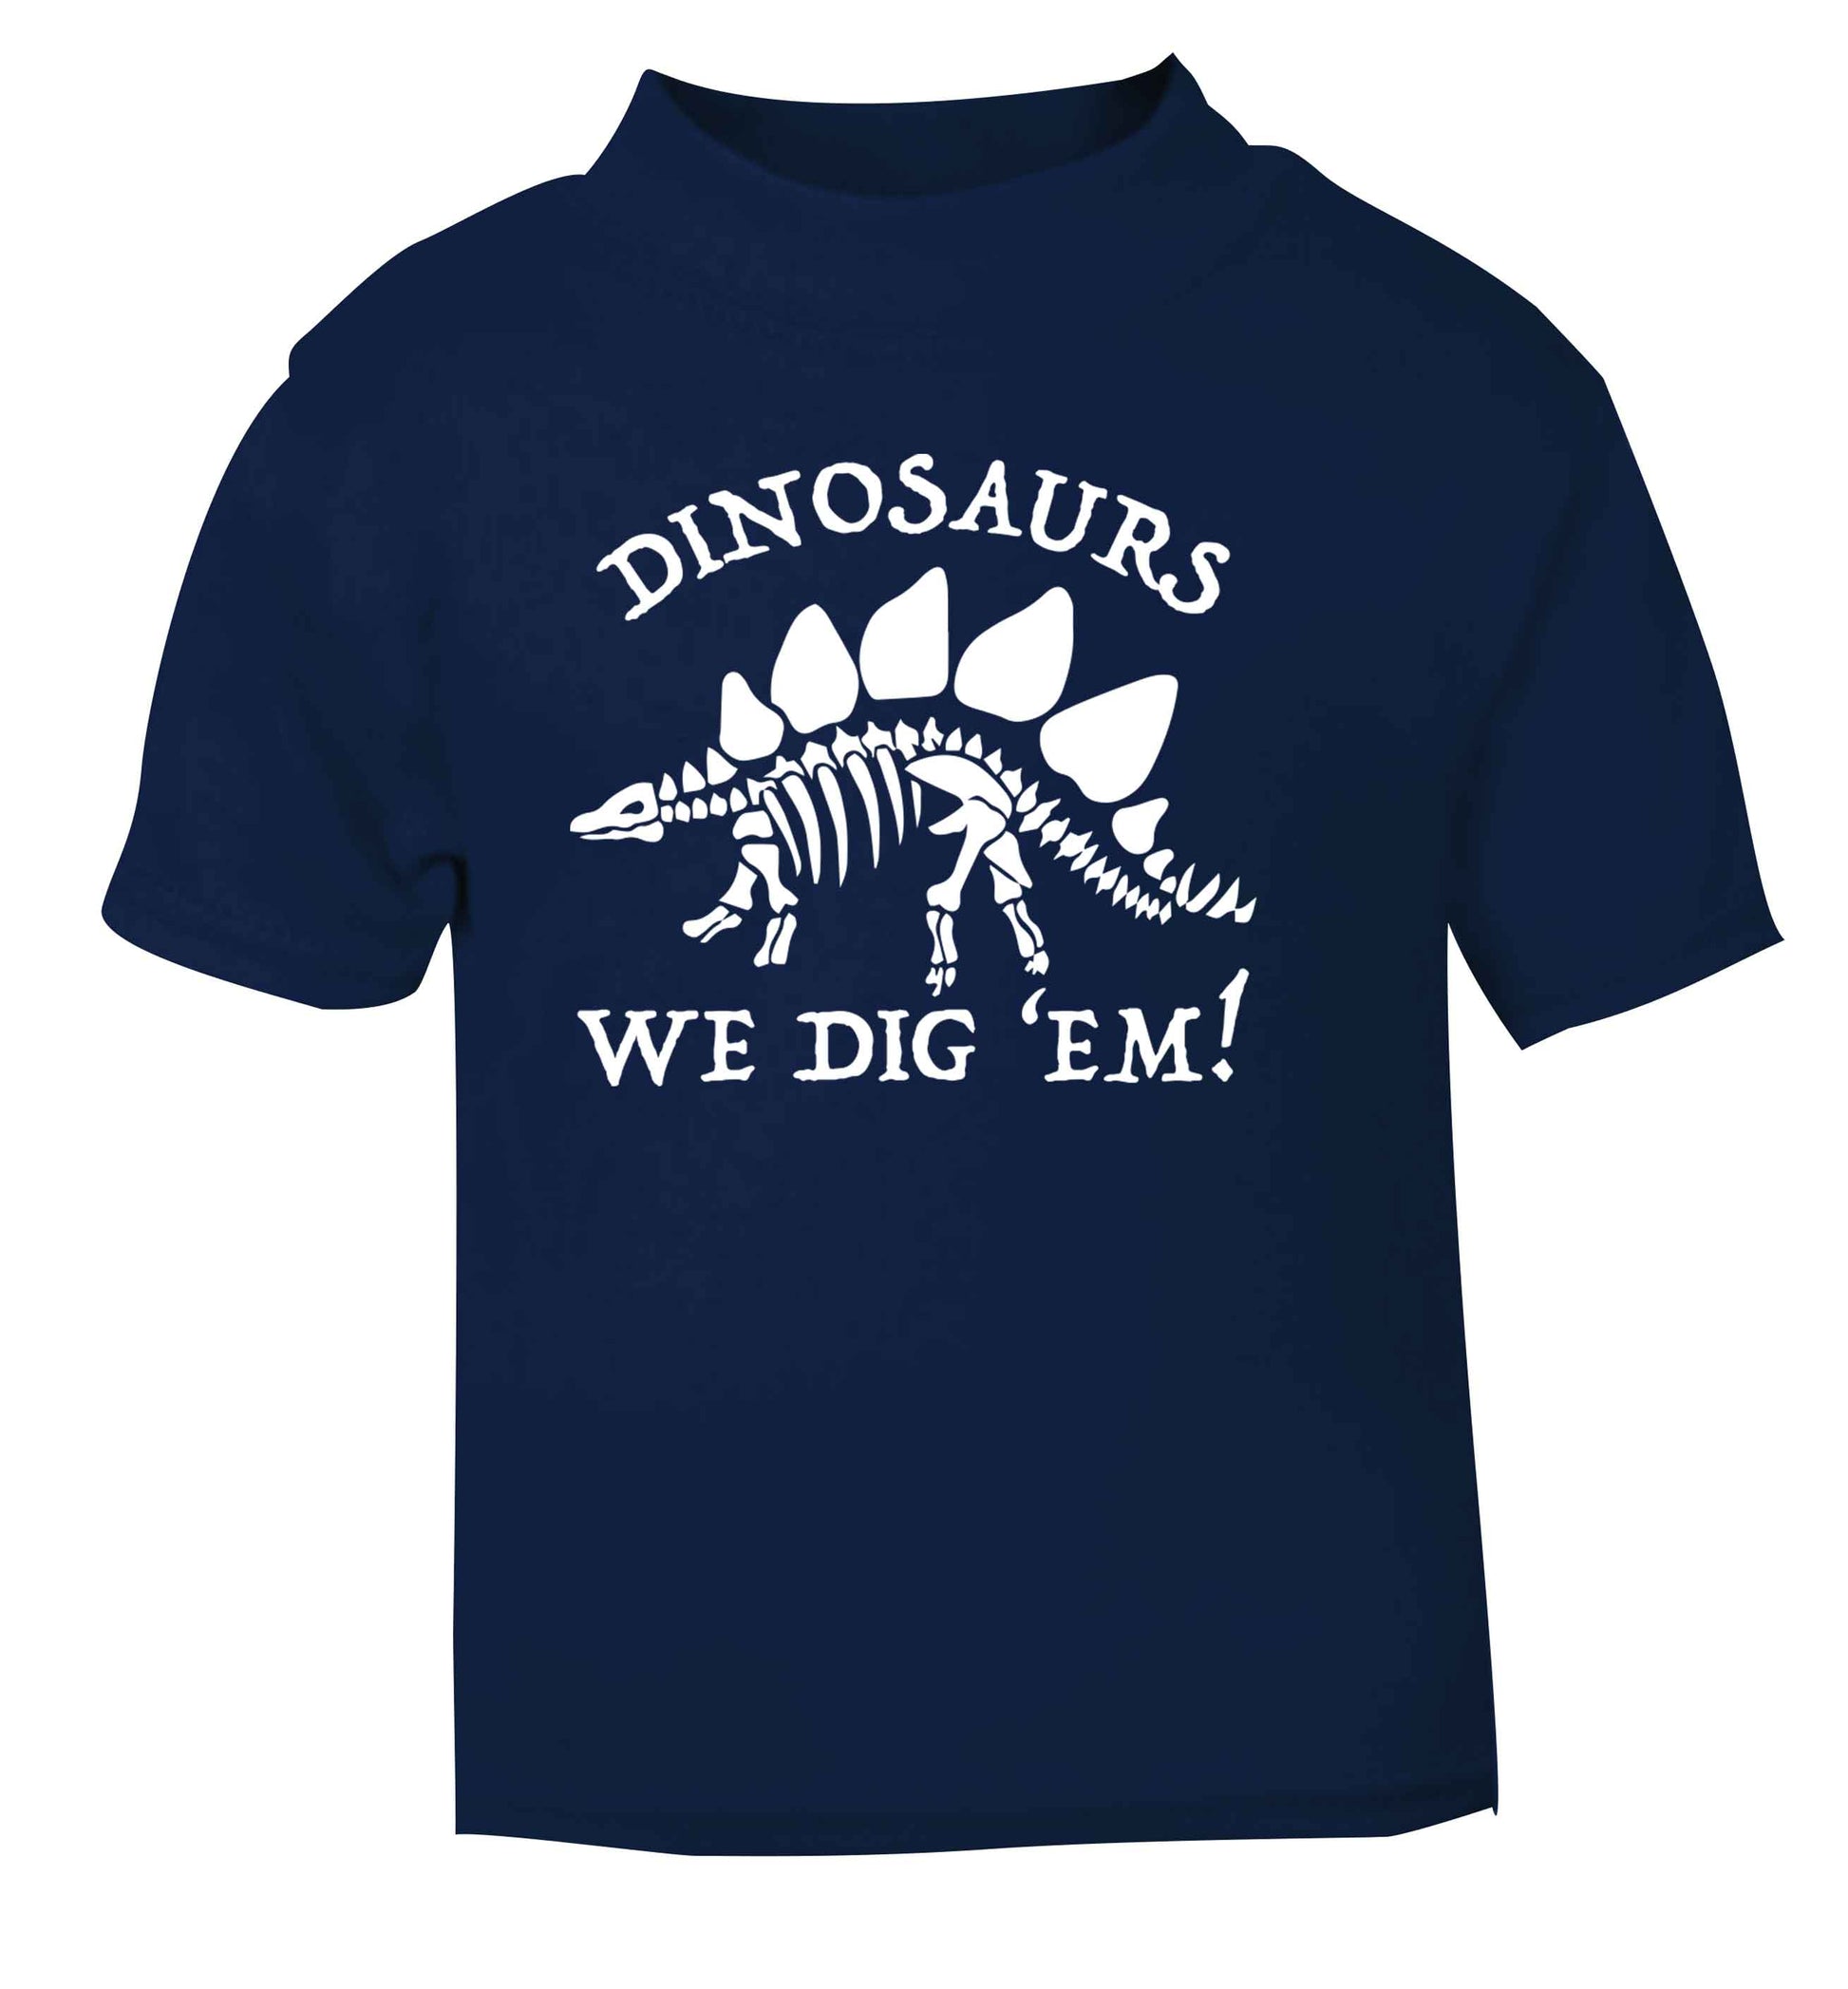 Dinosaurs we dig 'em! navy Baby Toddler Tshirt 2 Years